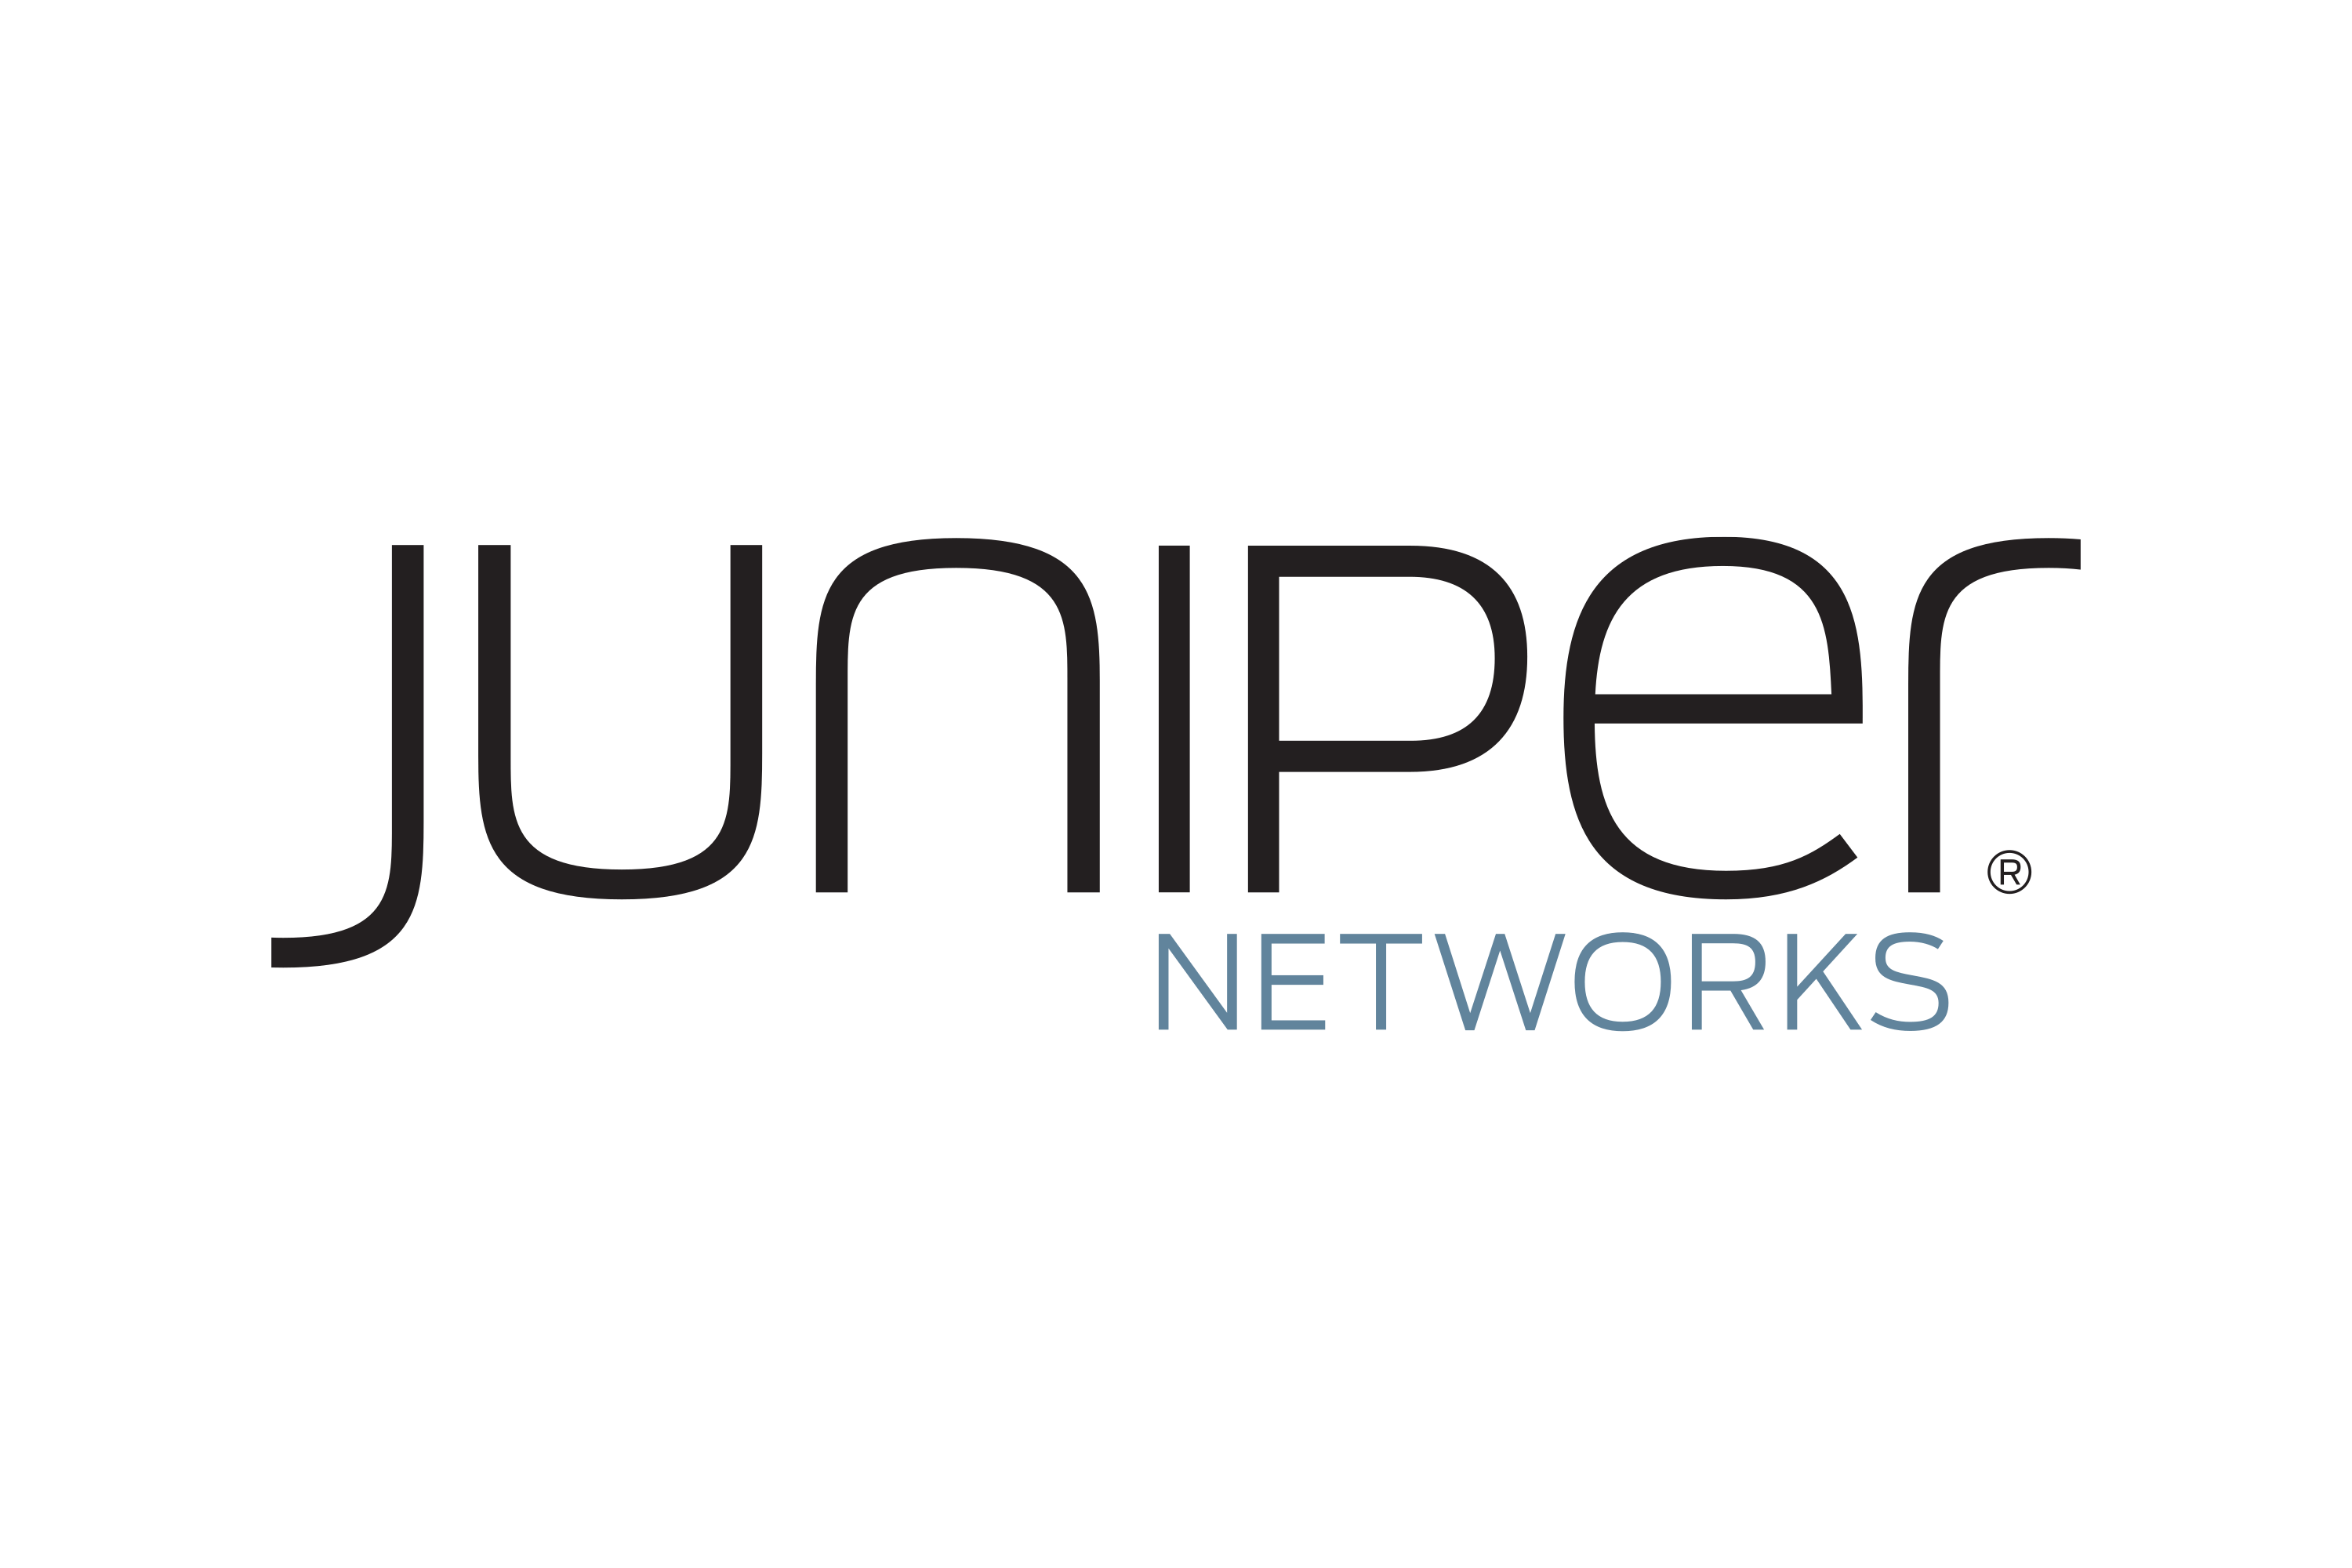 Juniper_Networks-Logo.wine